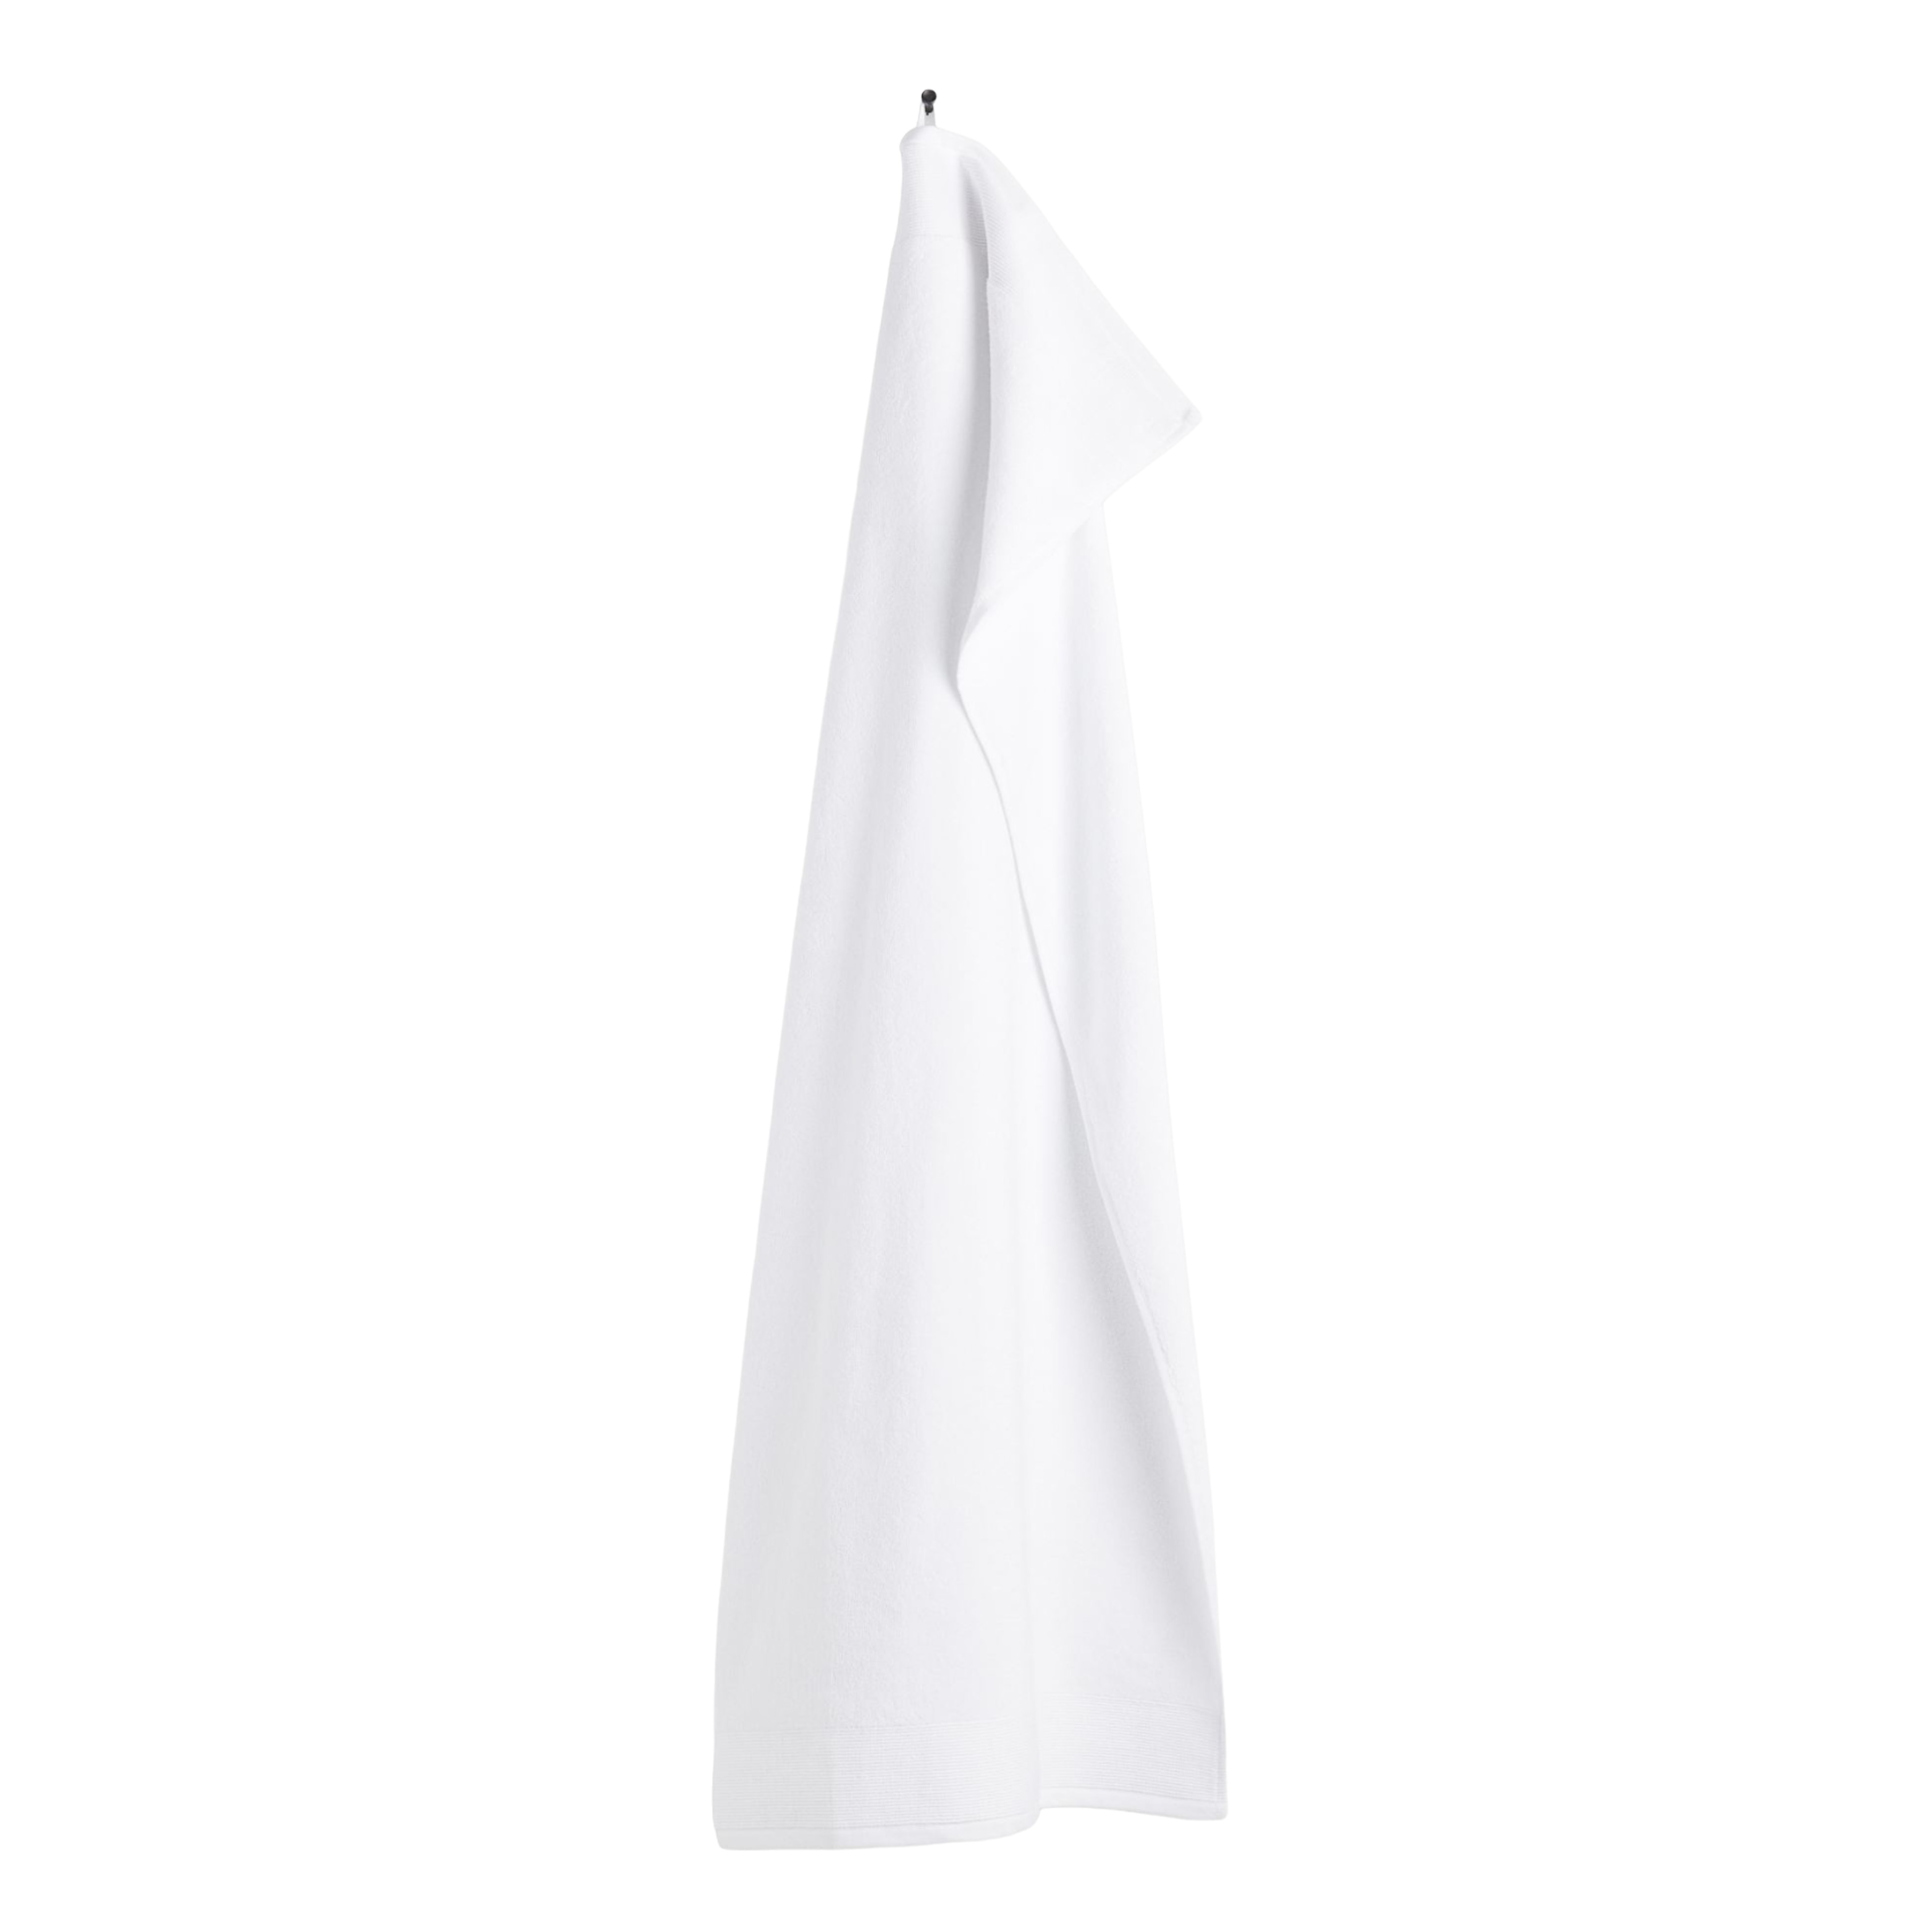 Банное полотенце H&M Home With Terry, белый полотенце банное из велюра 500 гм2 milleraie 70 x 140 см белый